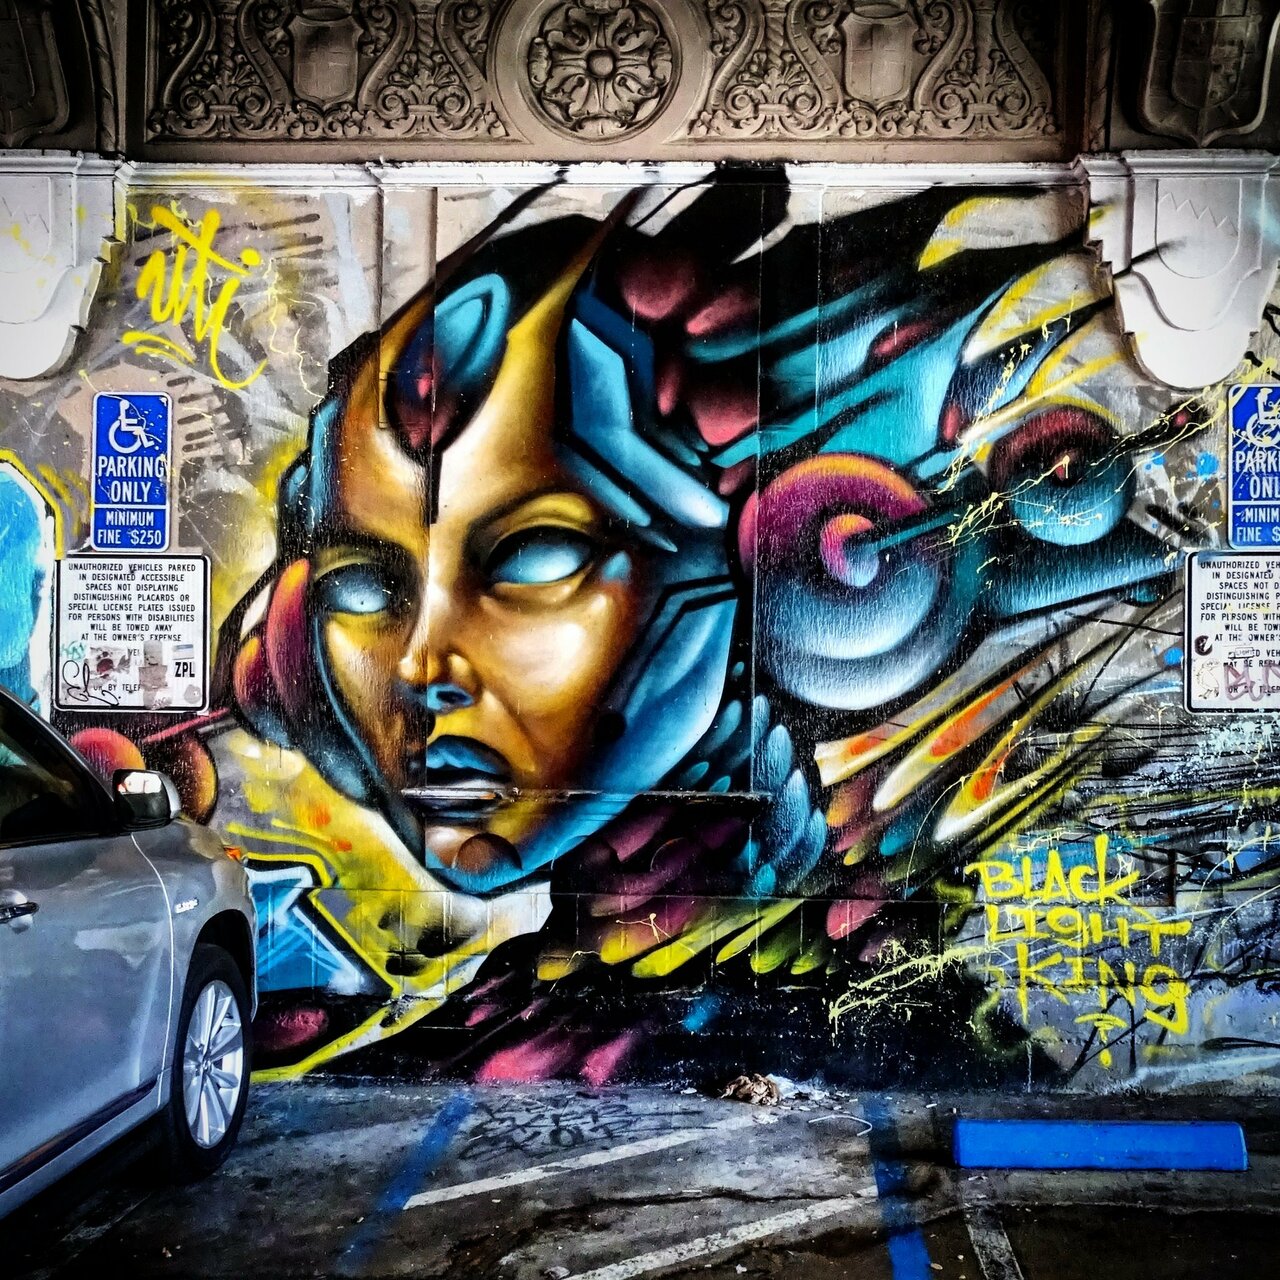 Mission District, San Francisco (again) #streetart #mural #painting #art #california #cali #graffiti https://t.co/R4NkaC23xG